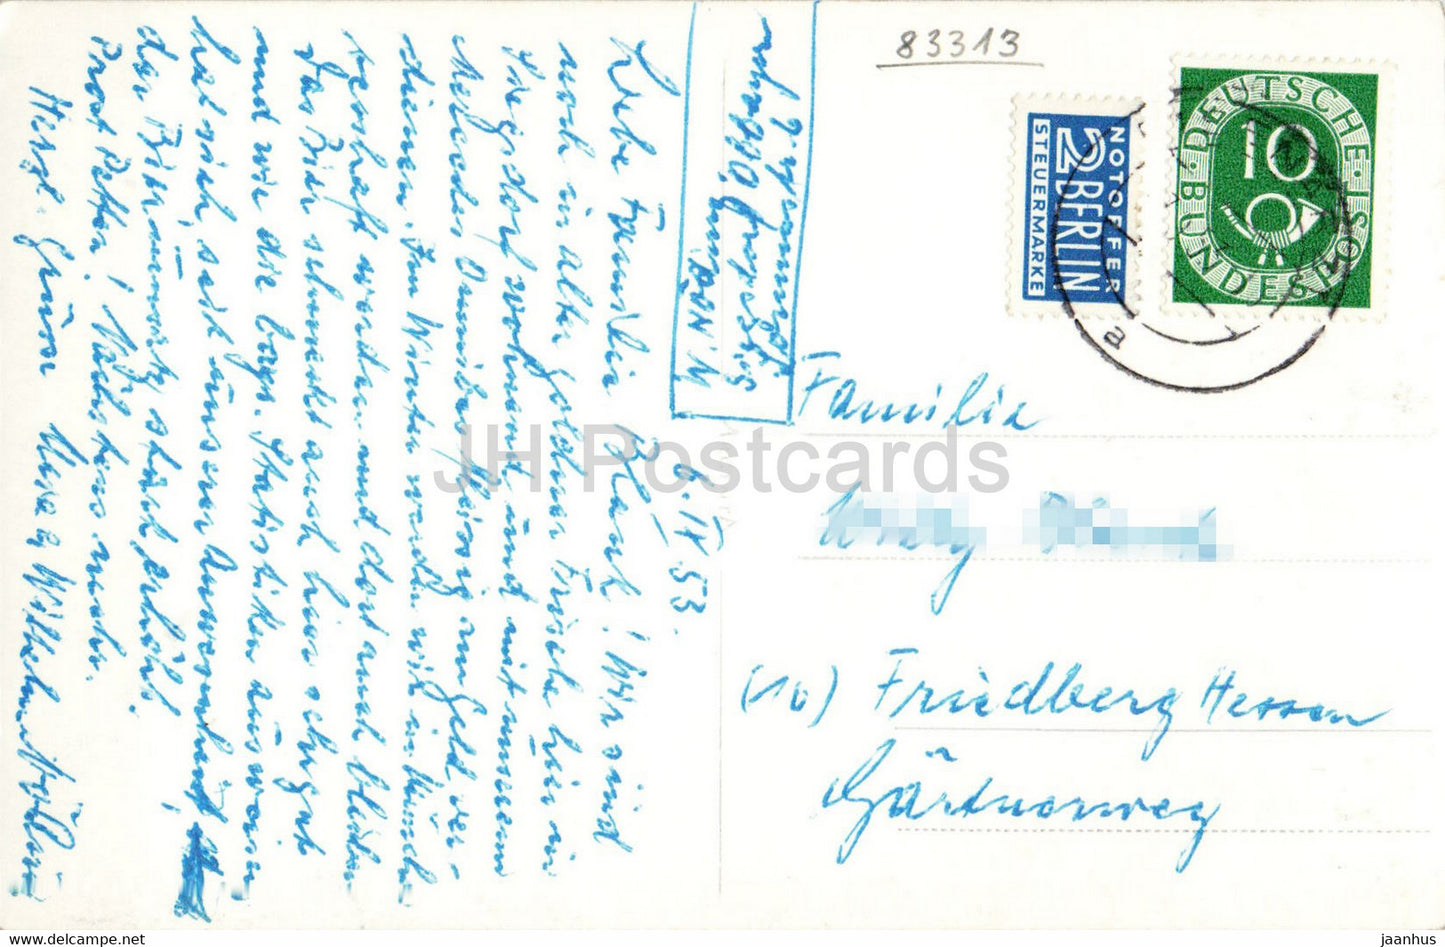 Siegsdorf m Hochfelln - old postcard - 1953 - Germany - used